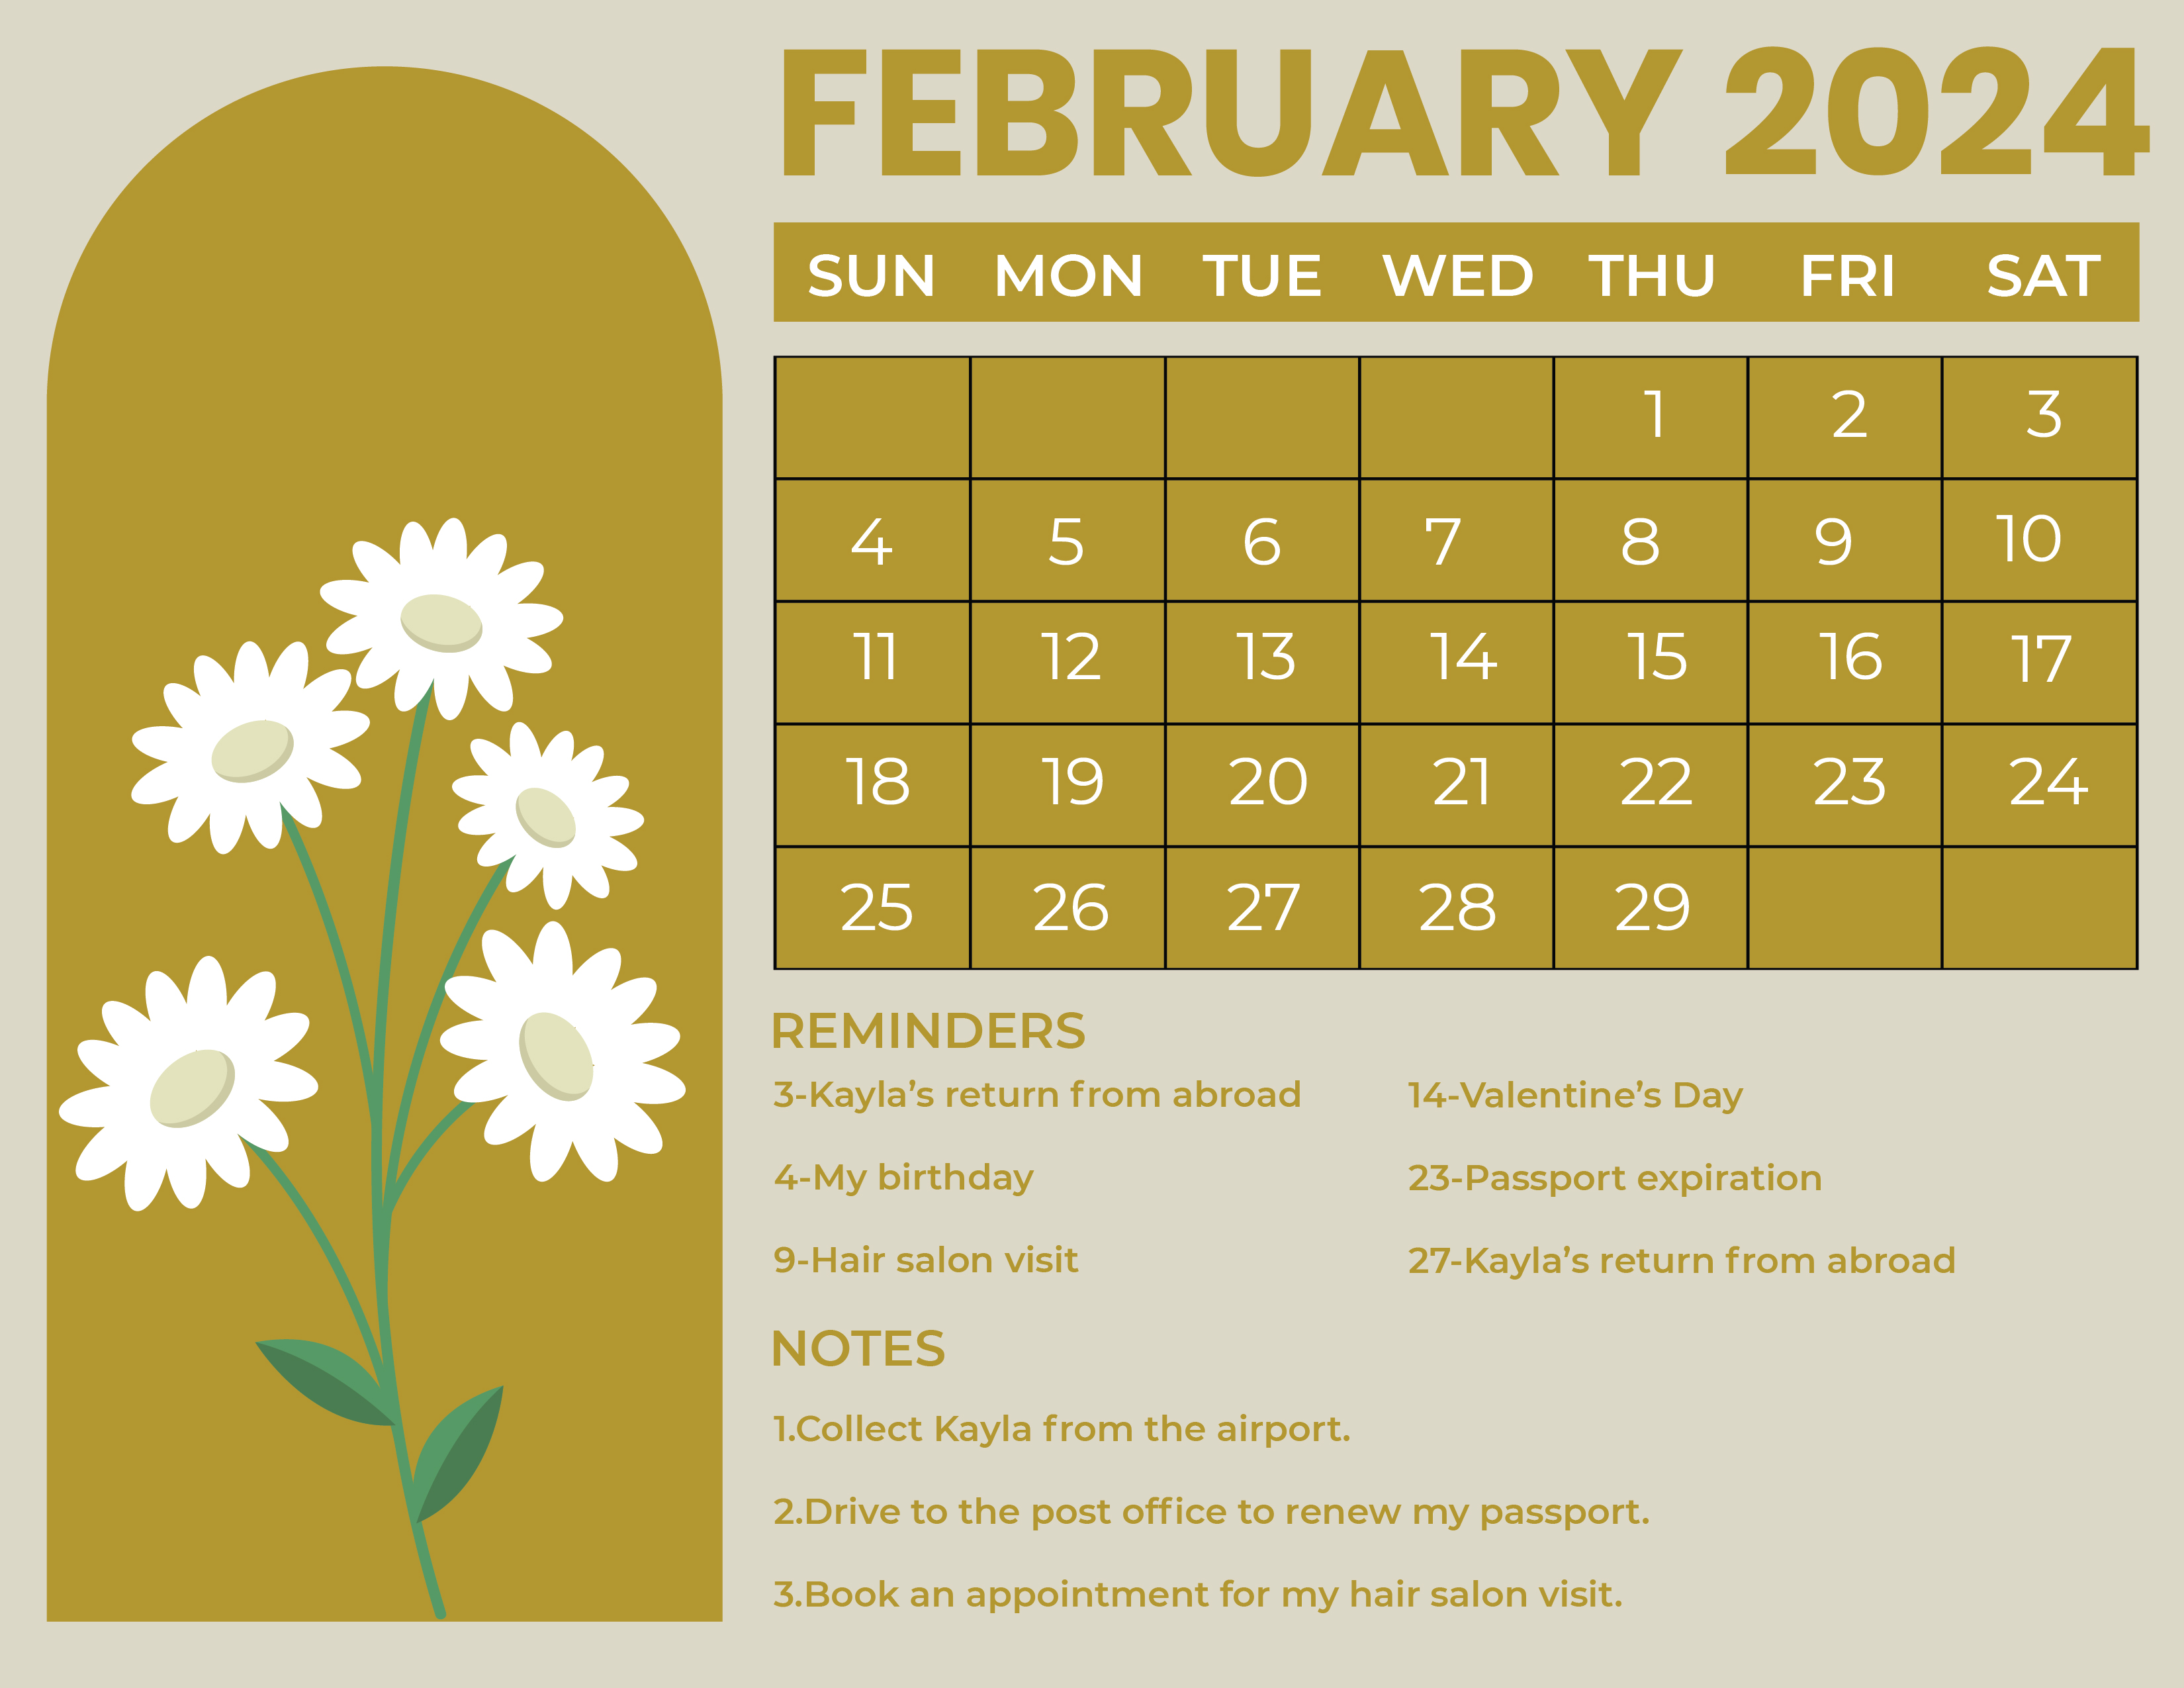 Free Pretty February 2023 Calendar Download in Word, Illustrator, PSD